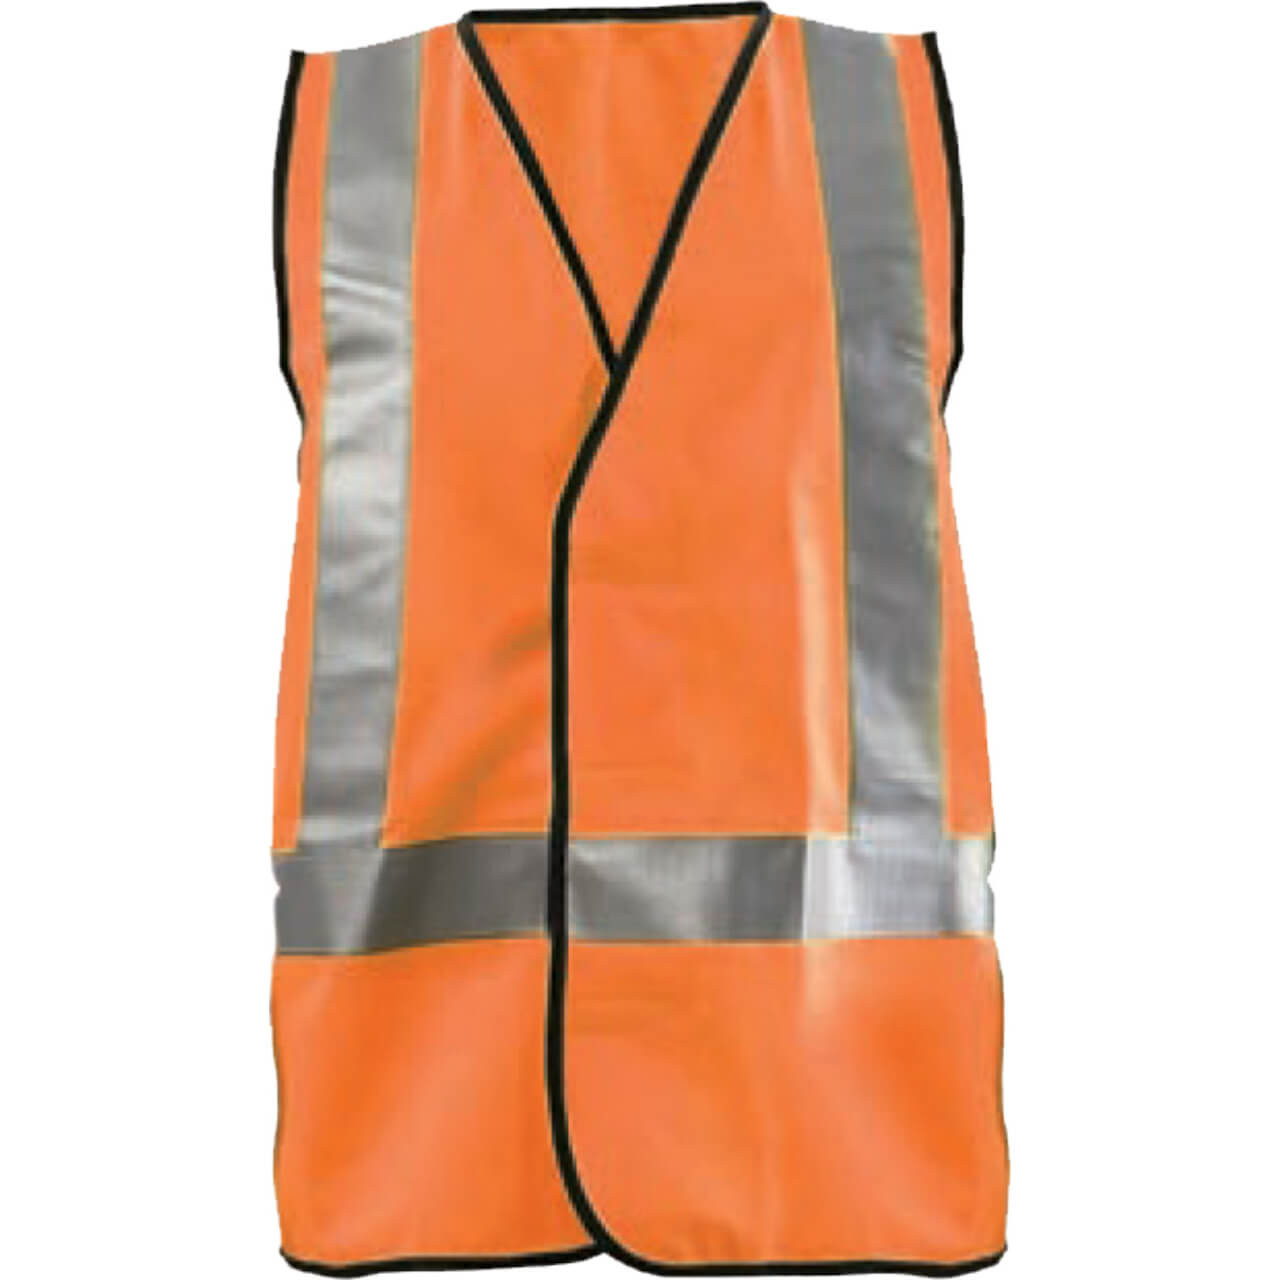 Paramount Fluro Orange X-Back Safety Vest - Size L Day/Night Use